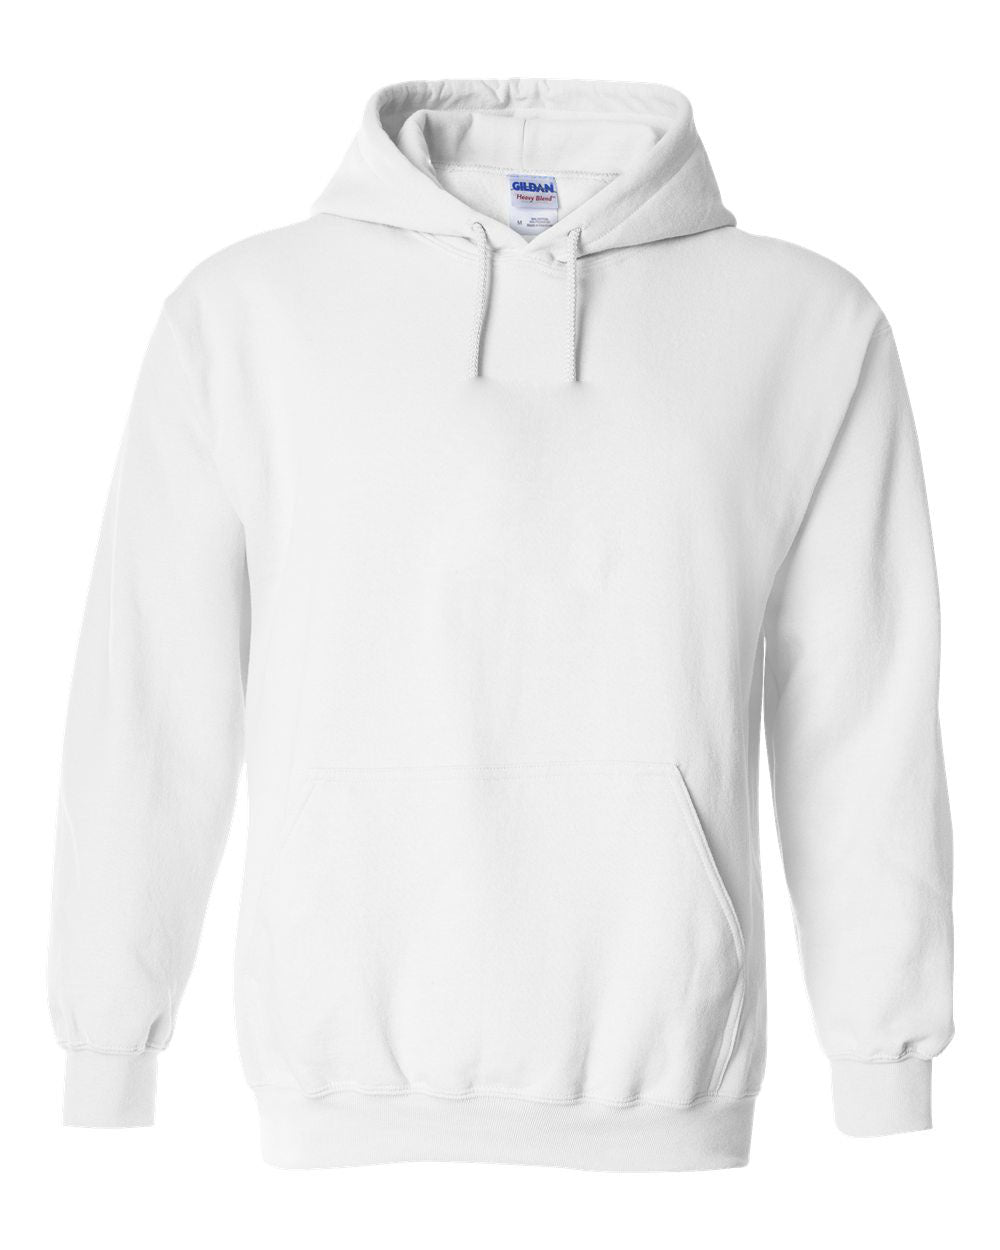 VTHS Design 10 Hooded Sweatshirt